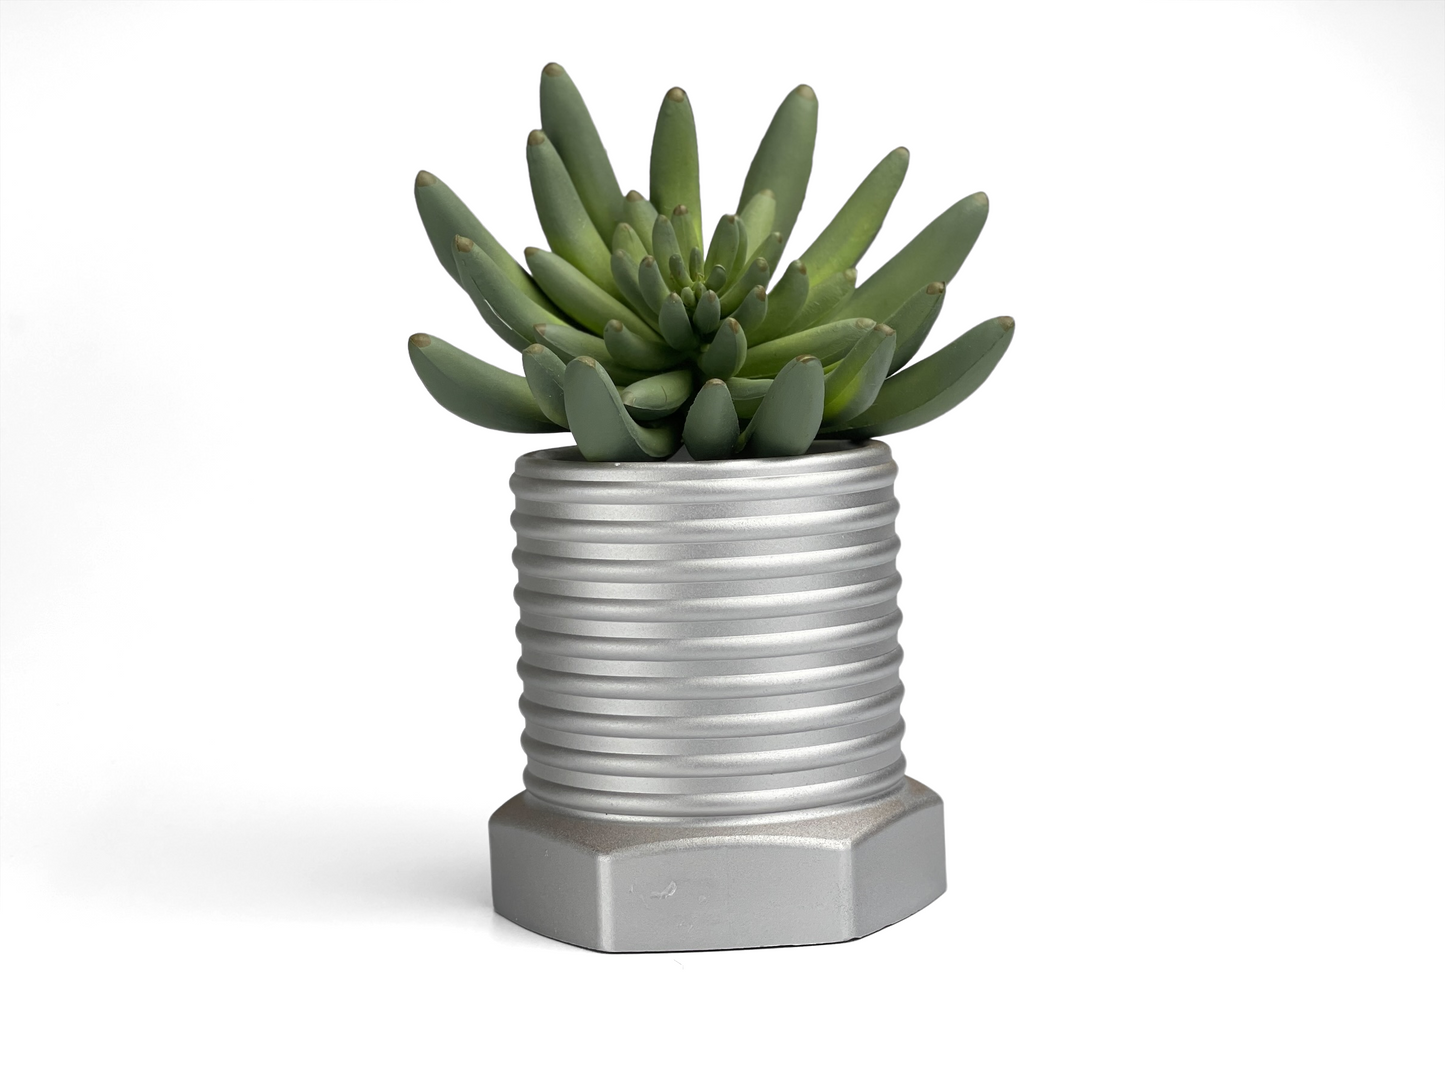 Bolt Planter | Industrial Vase